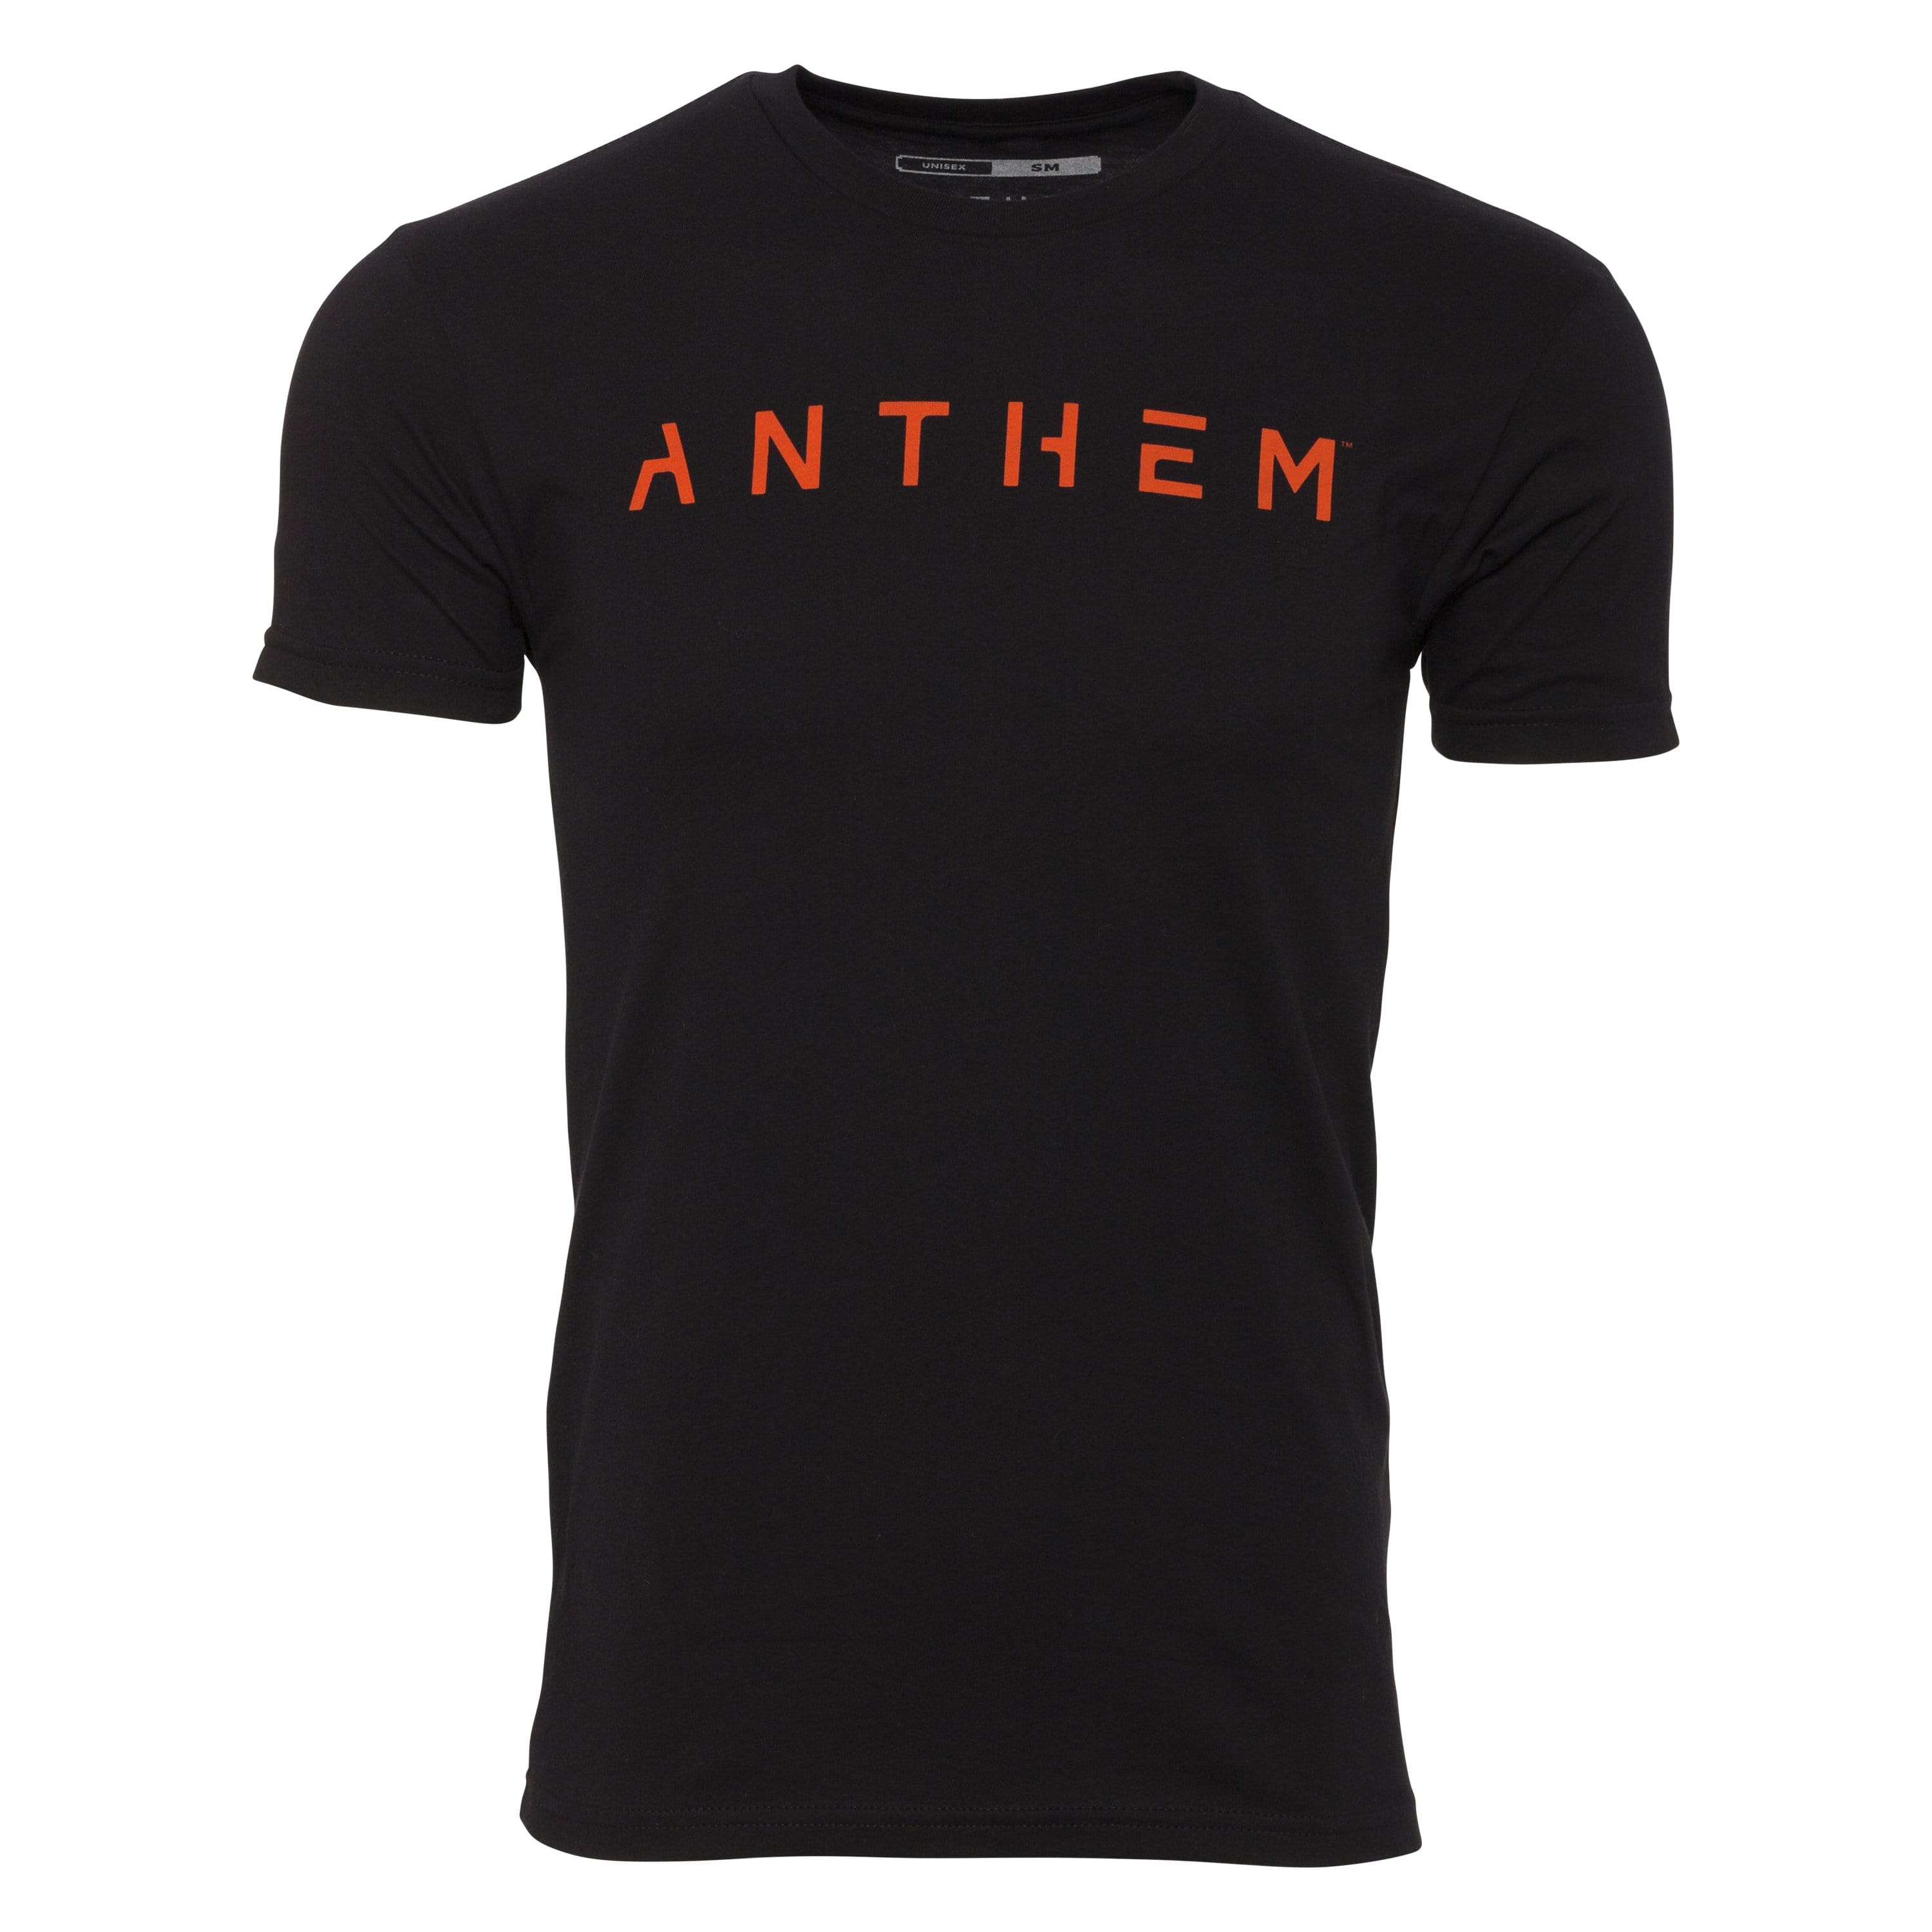 Anthem Emblem 100% Cotton Tee - Black